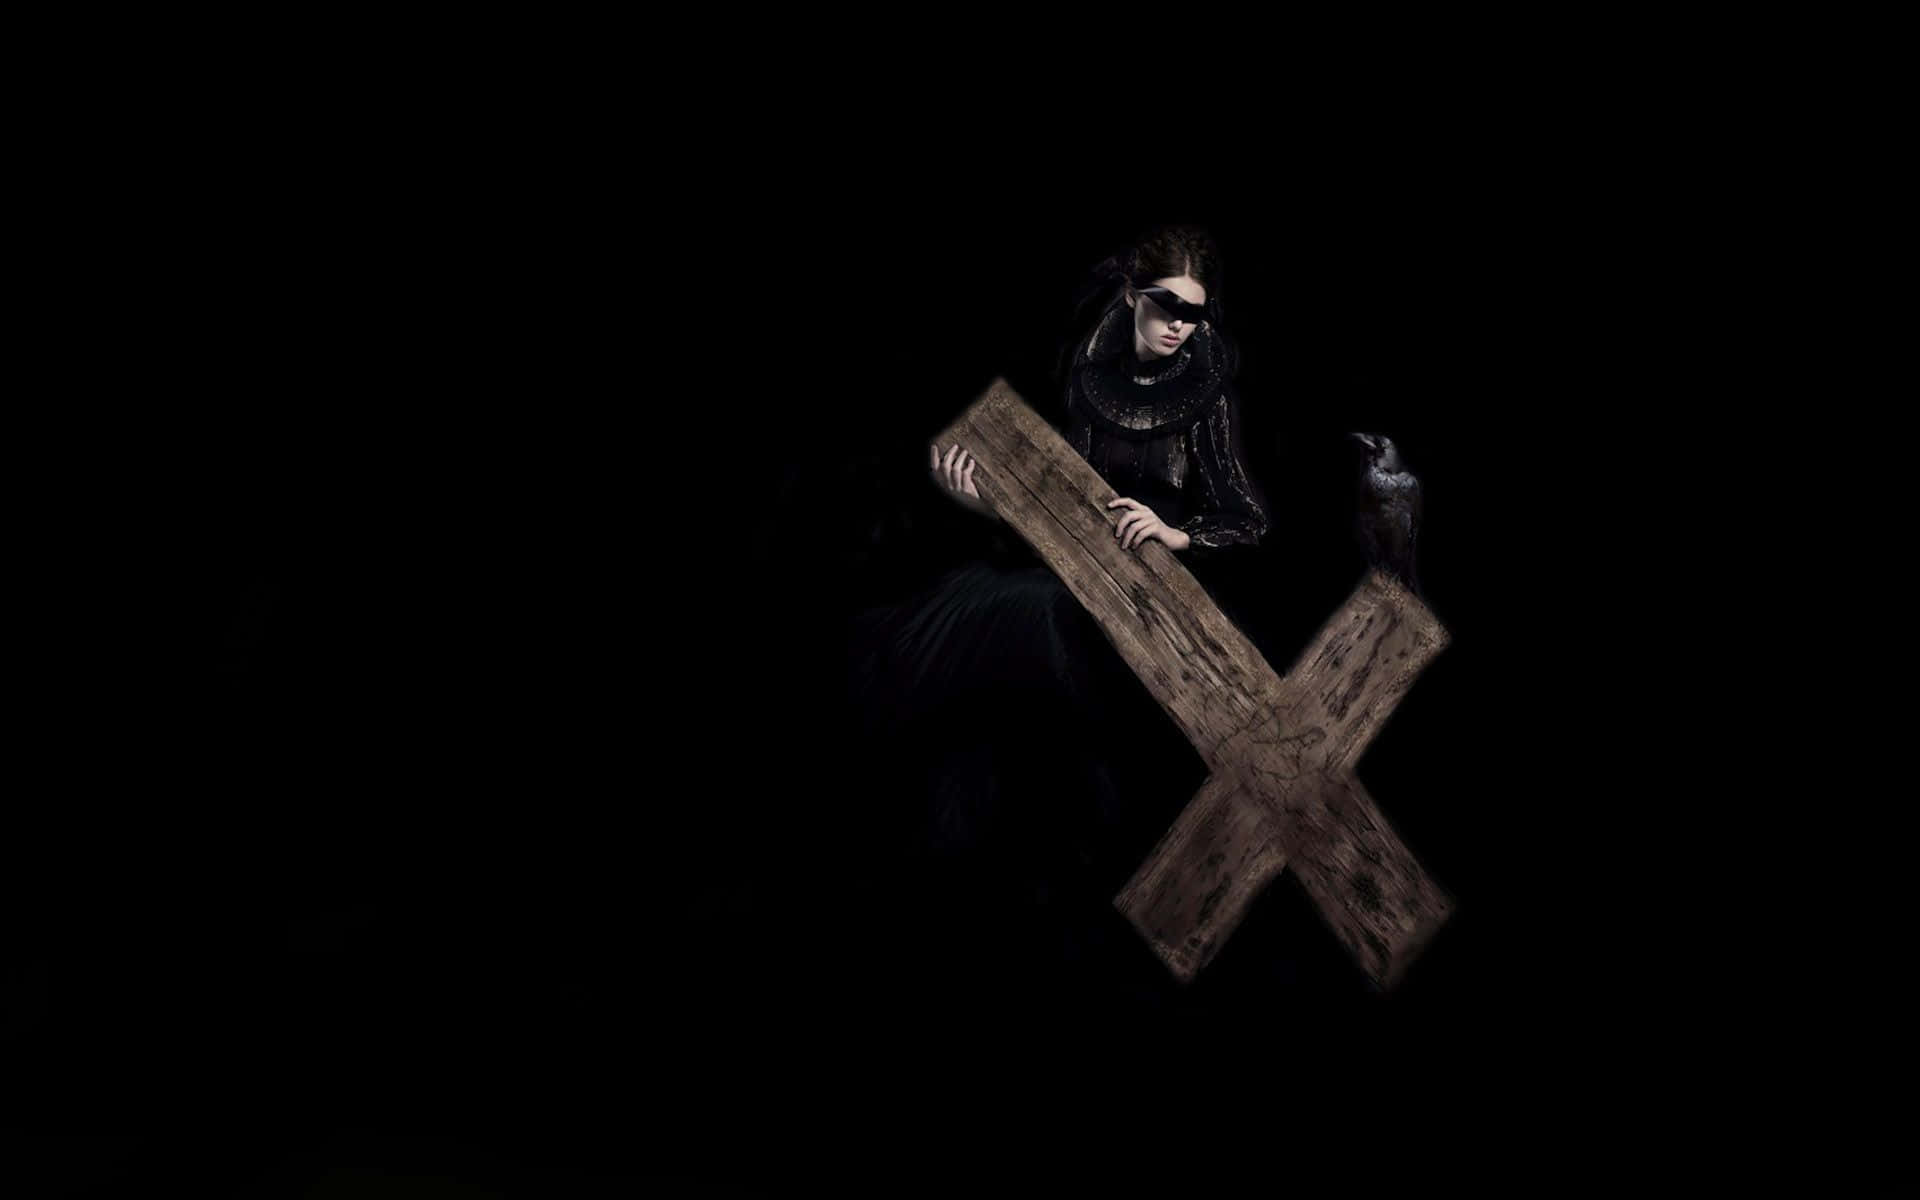 "The Black Cross Symbolizes Purity" Wallpaper